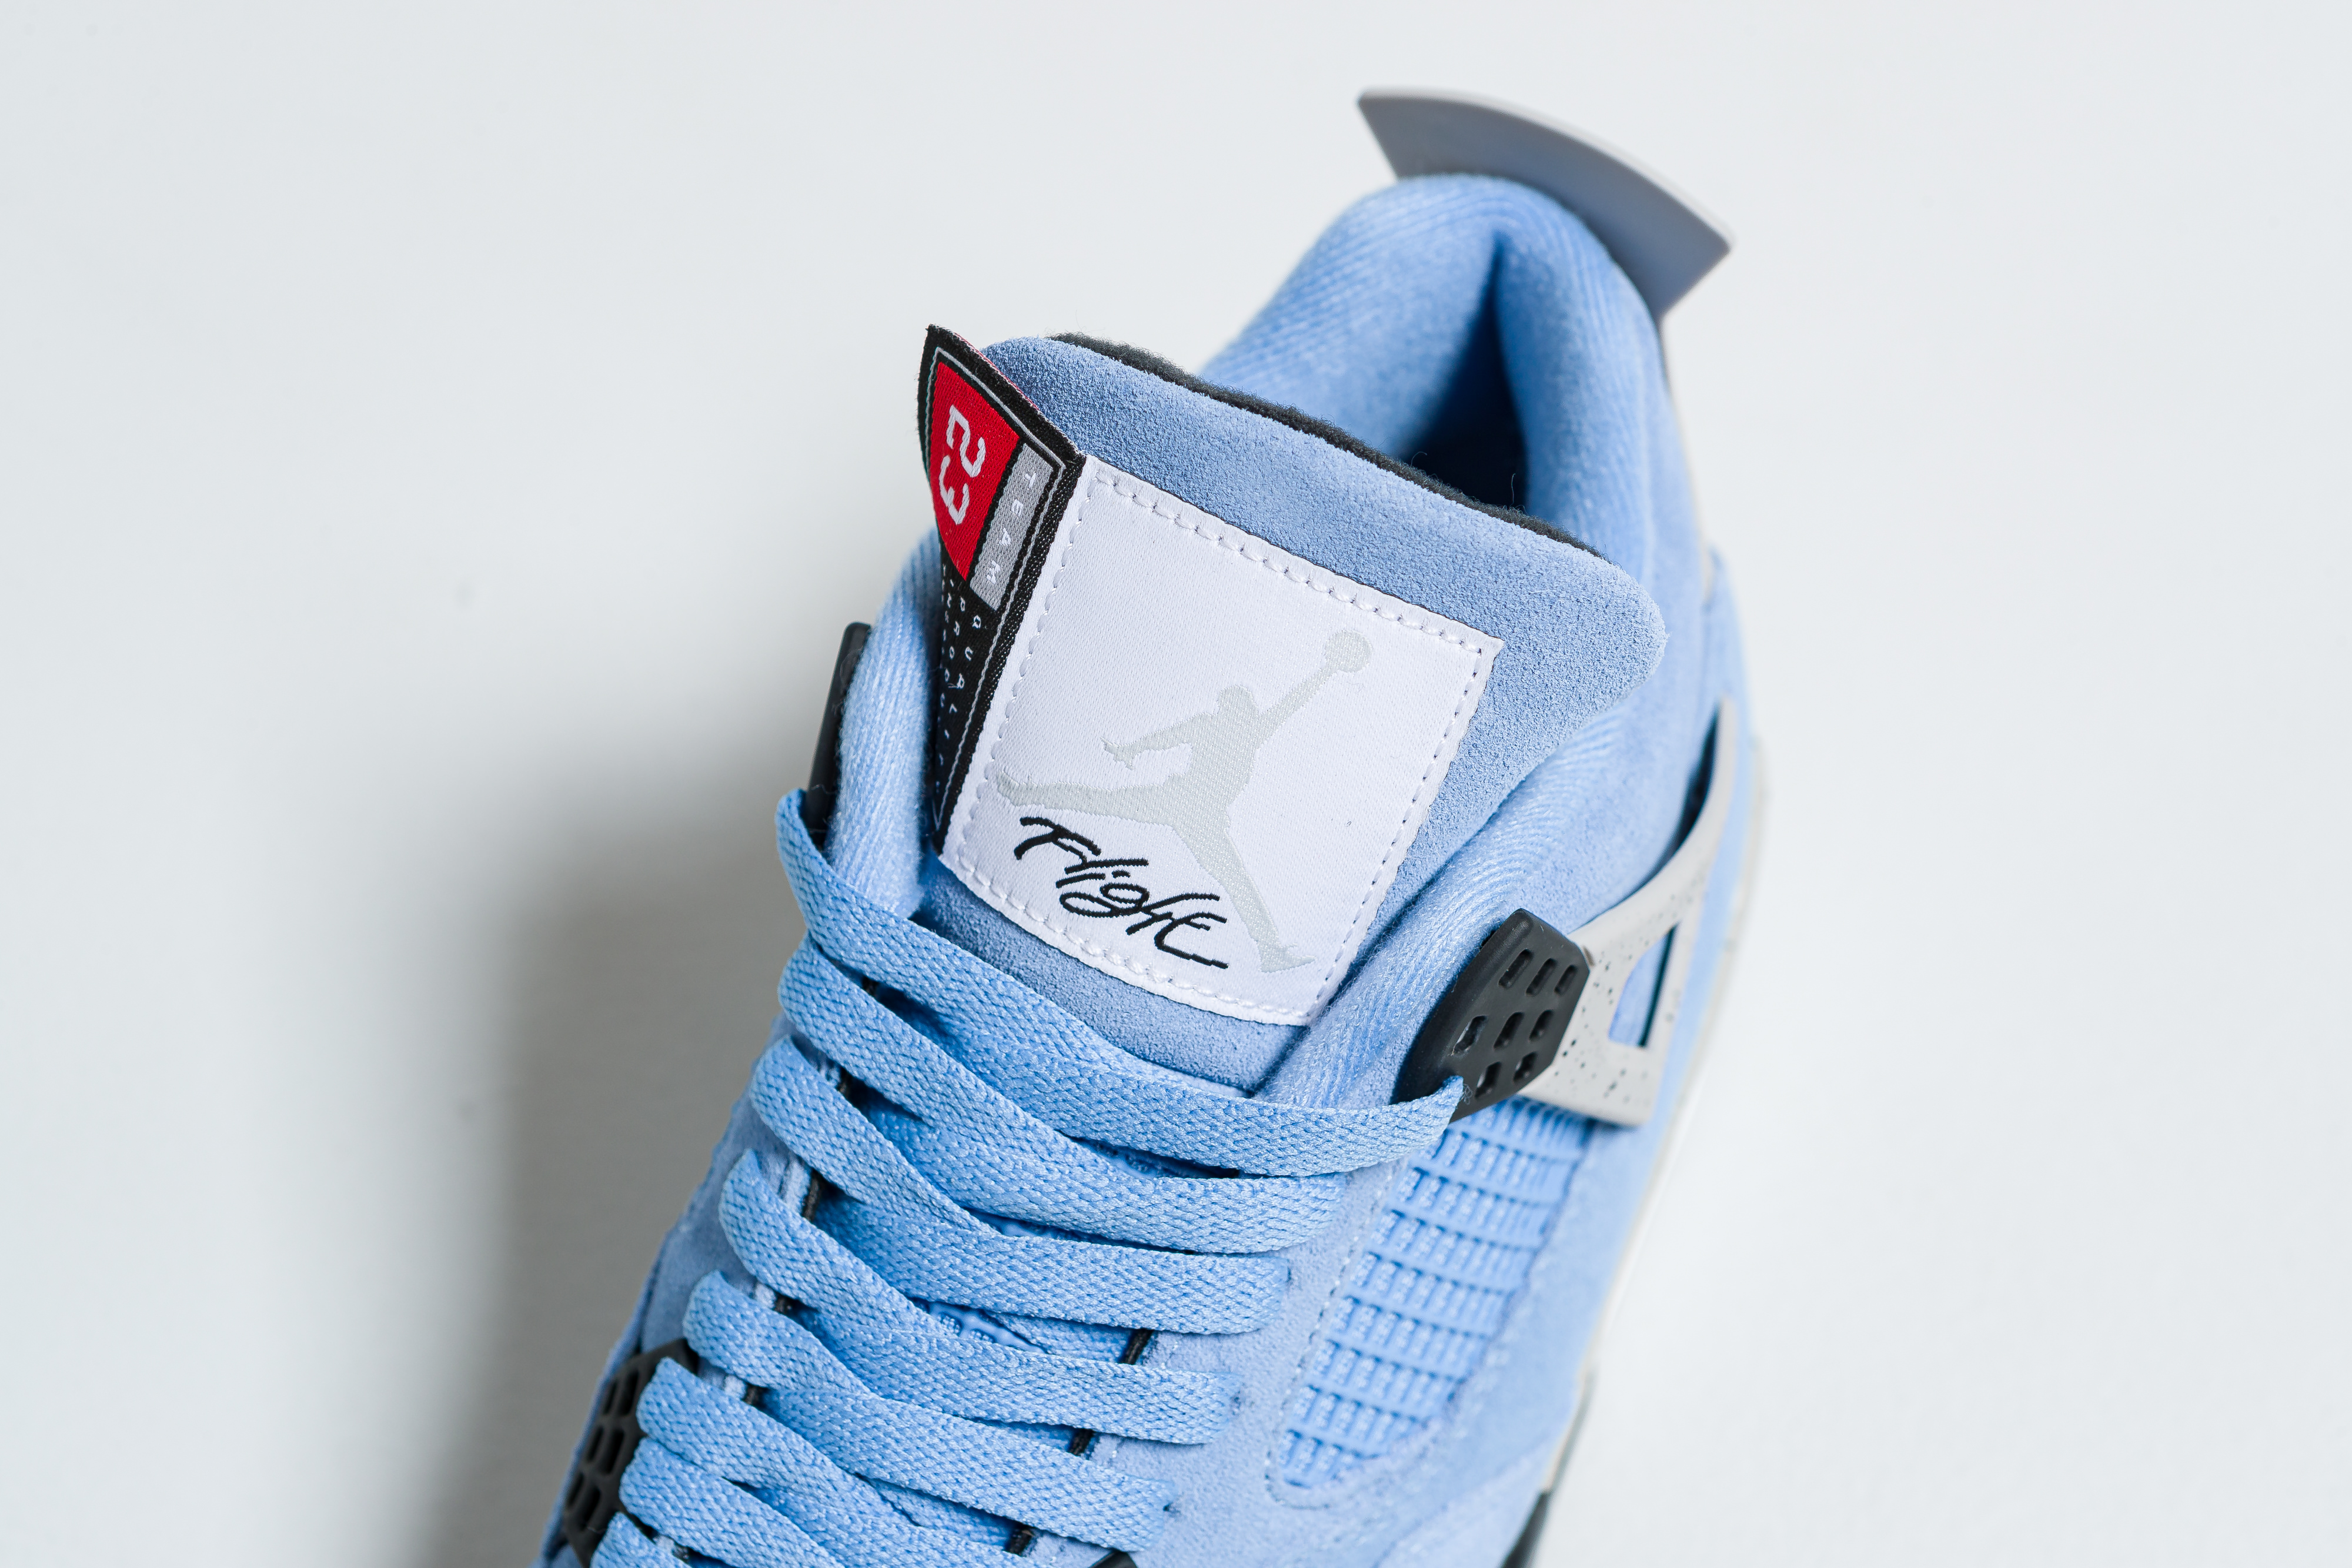 Up There Launches - Nike Air Jordan 4 Retro 'University Blue'